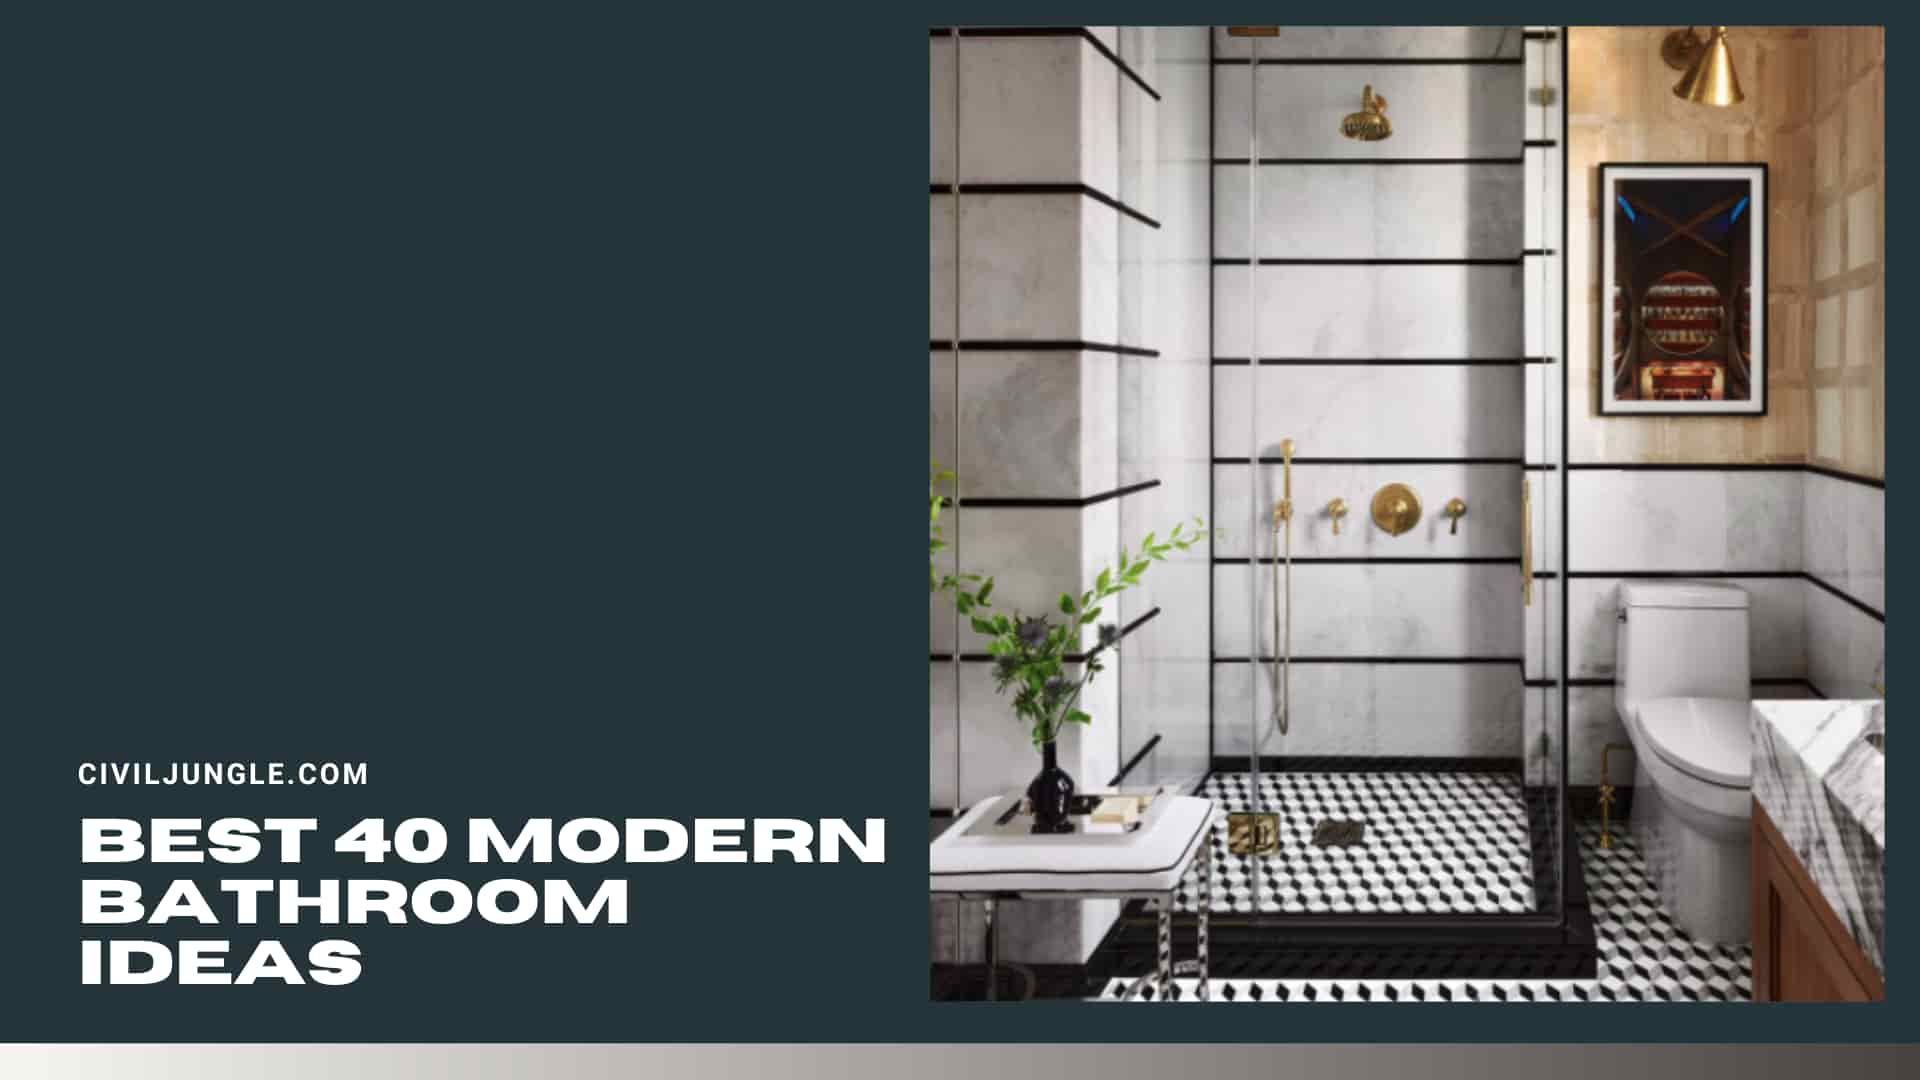 Best 40 Modern Bathroom Ideas